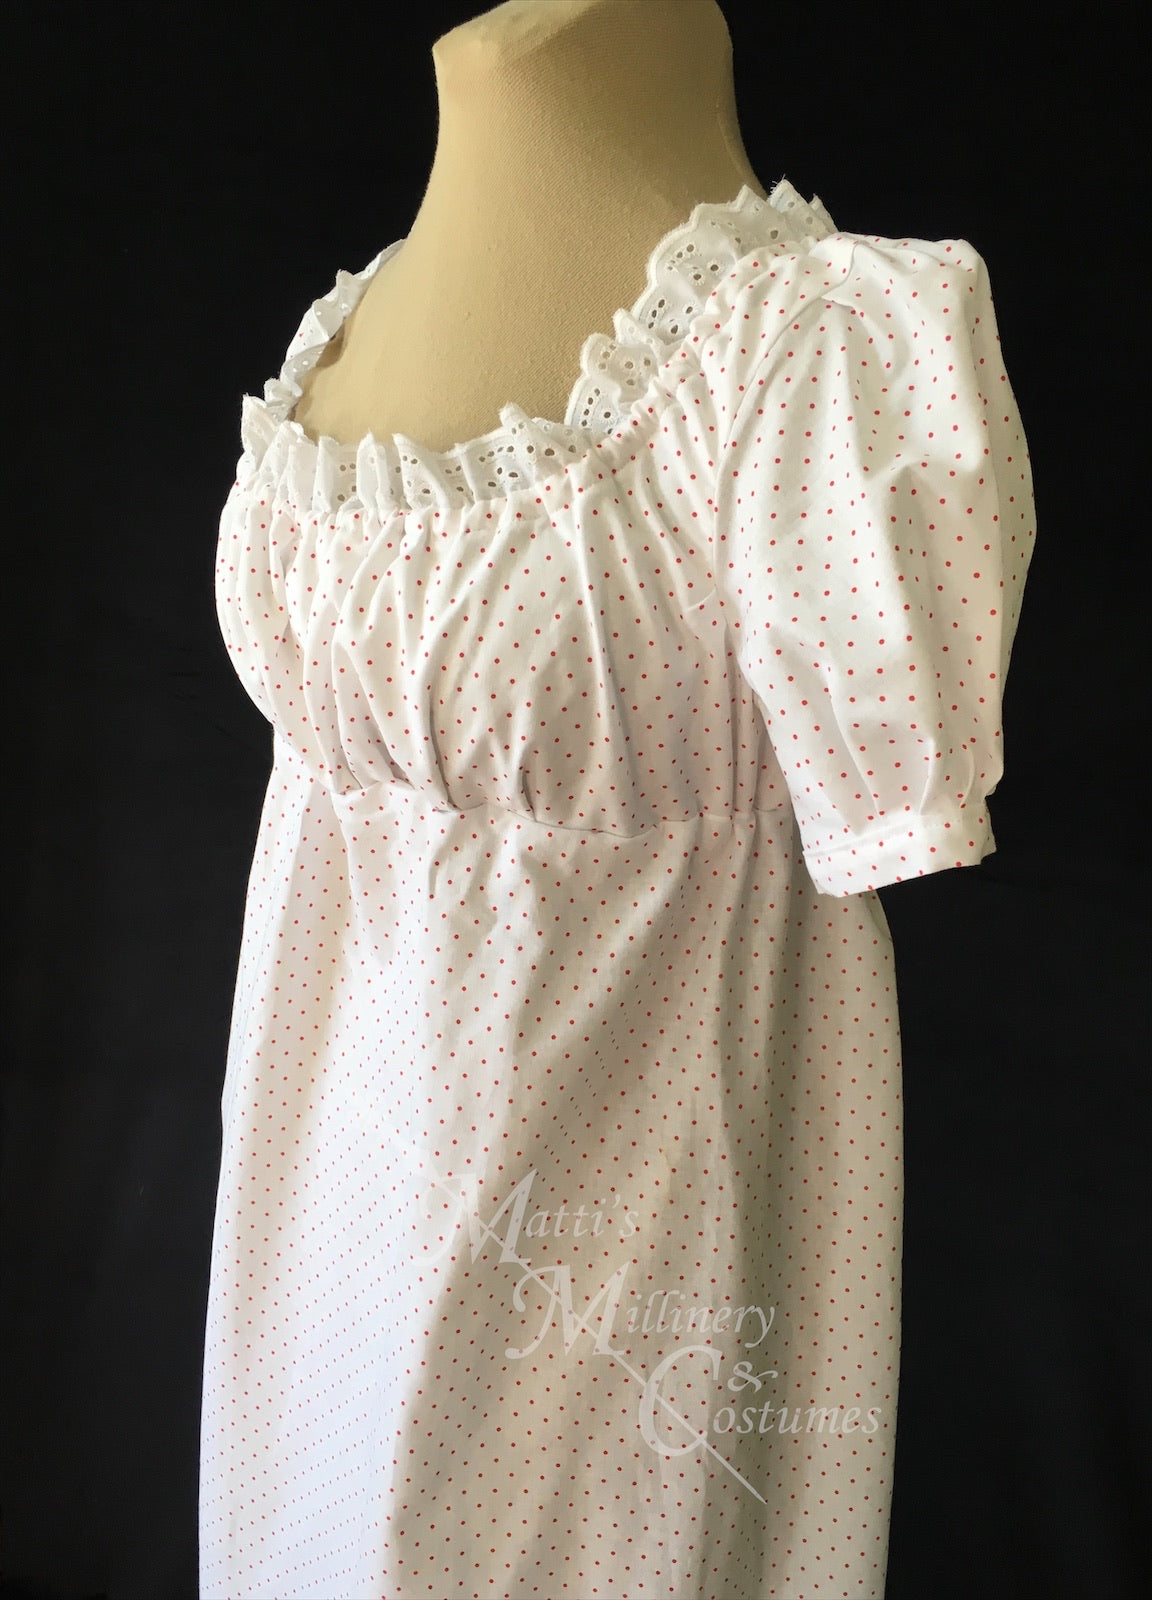 Print Cotton Jane Austen Regency Day Dress Gown